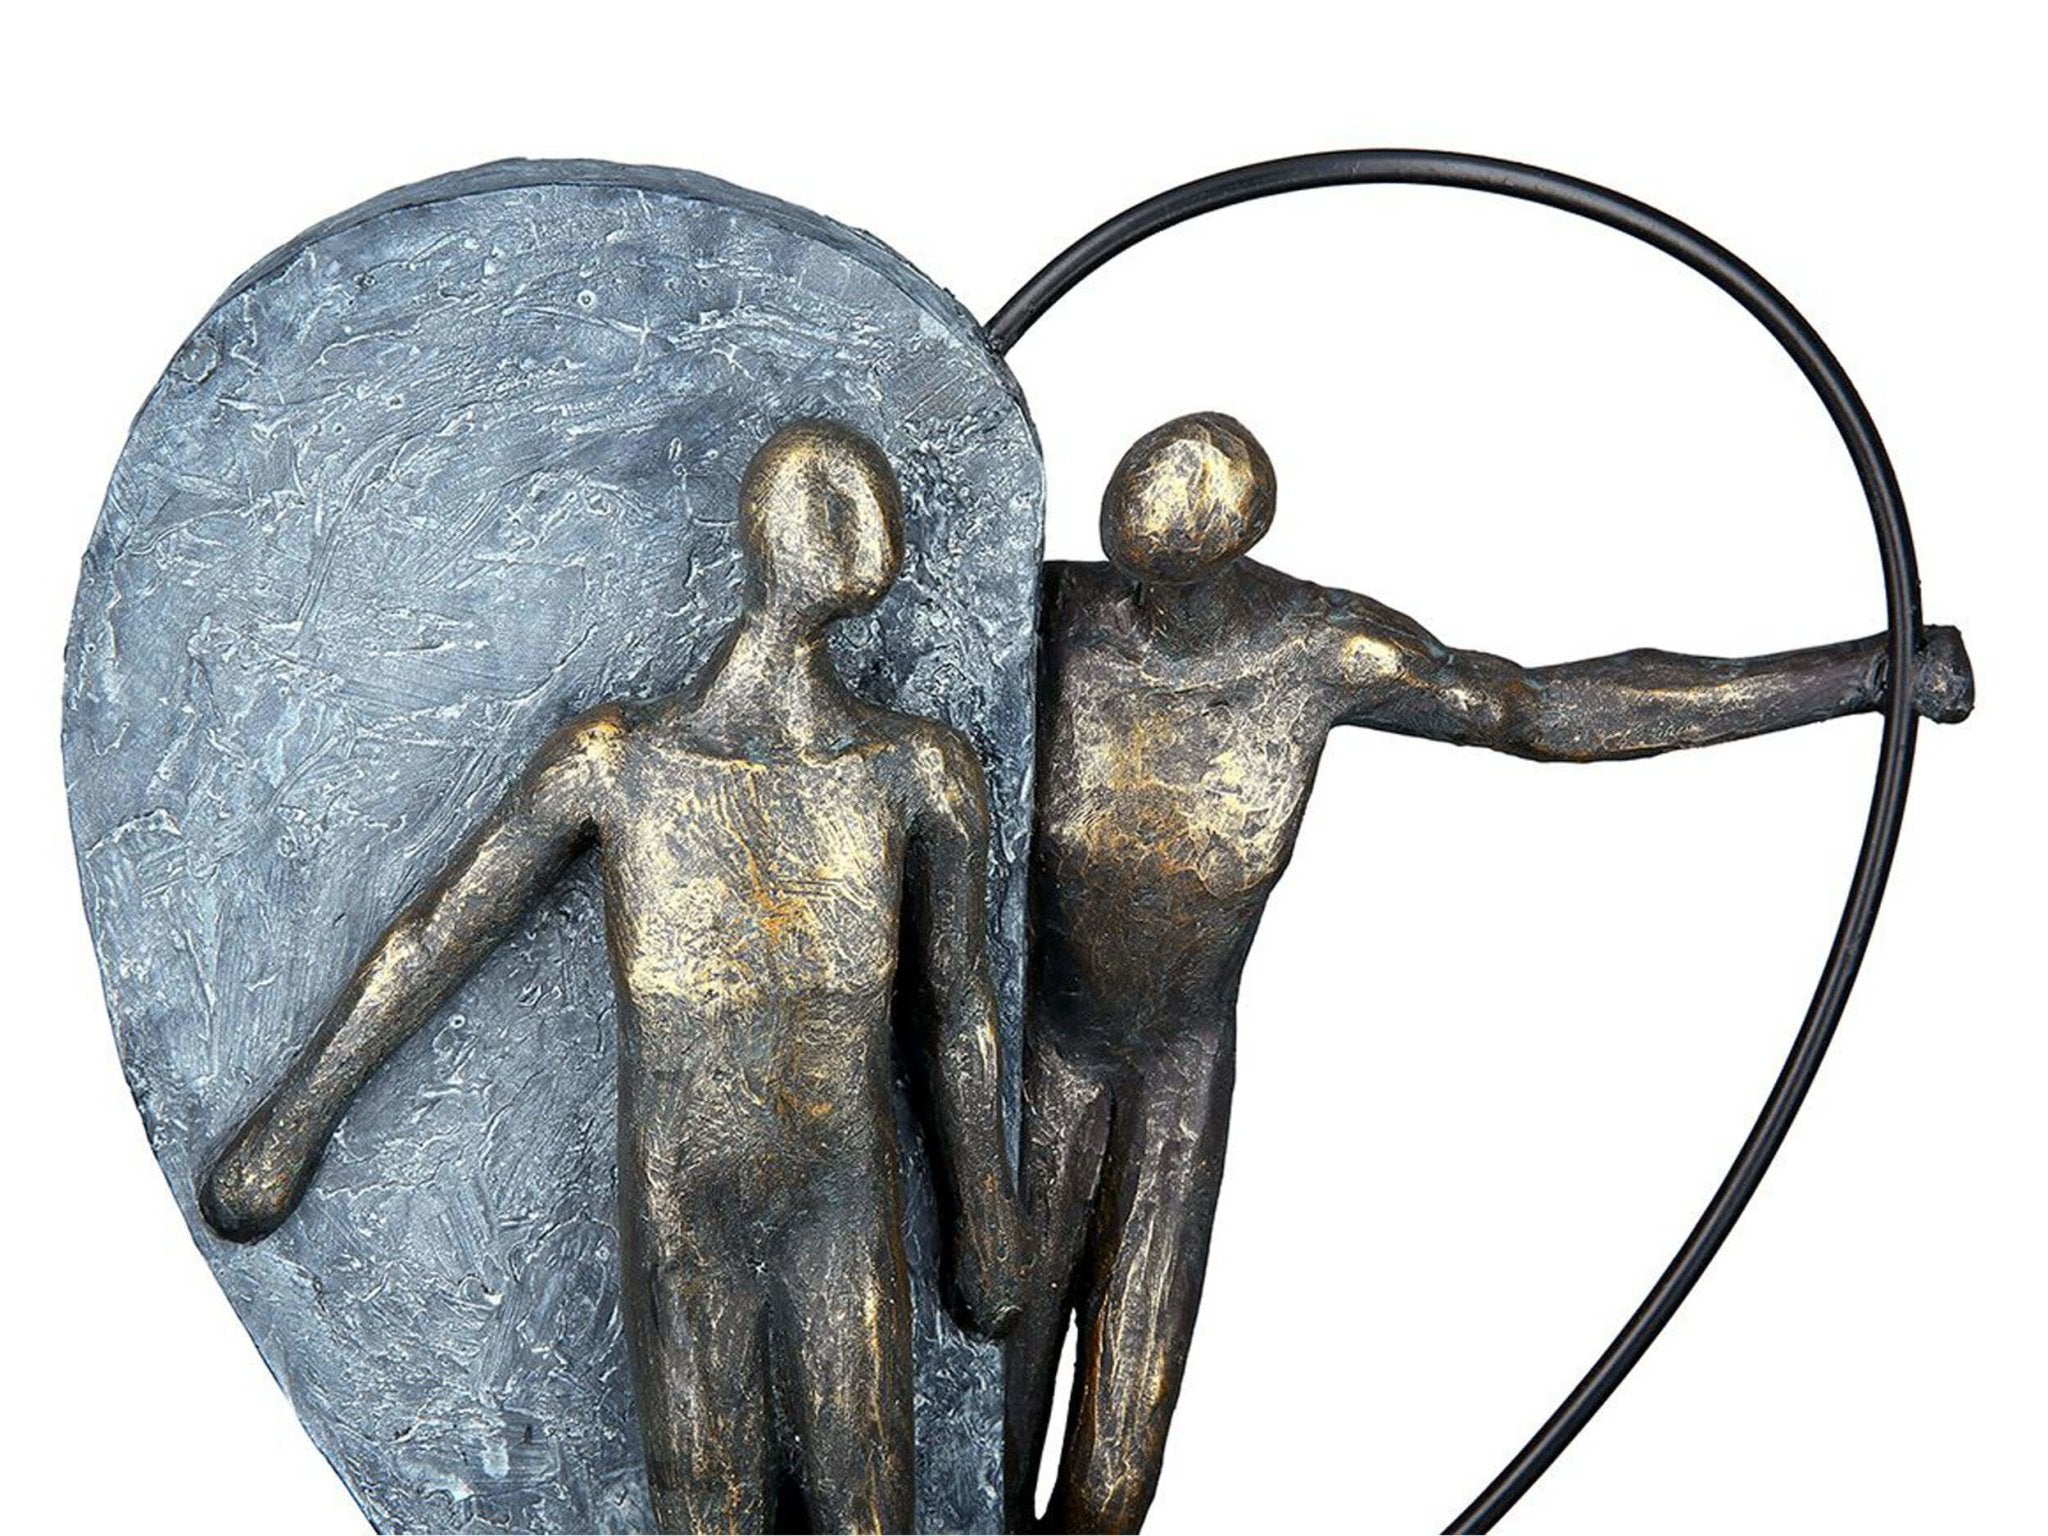 Love couple in heart figure - Grey/Bronze | heart beat | H. 31 cm